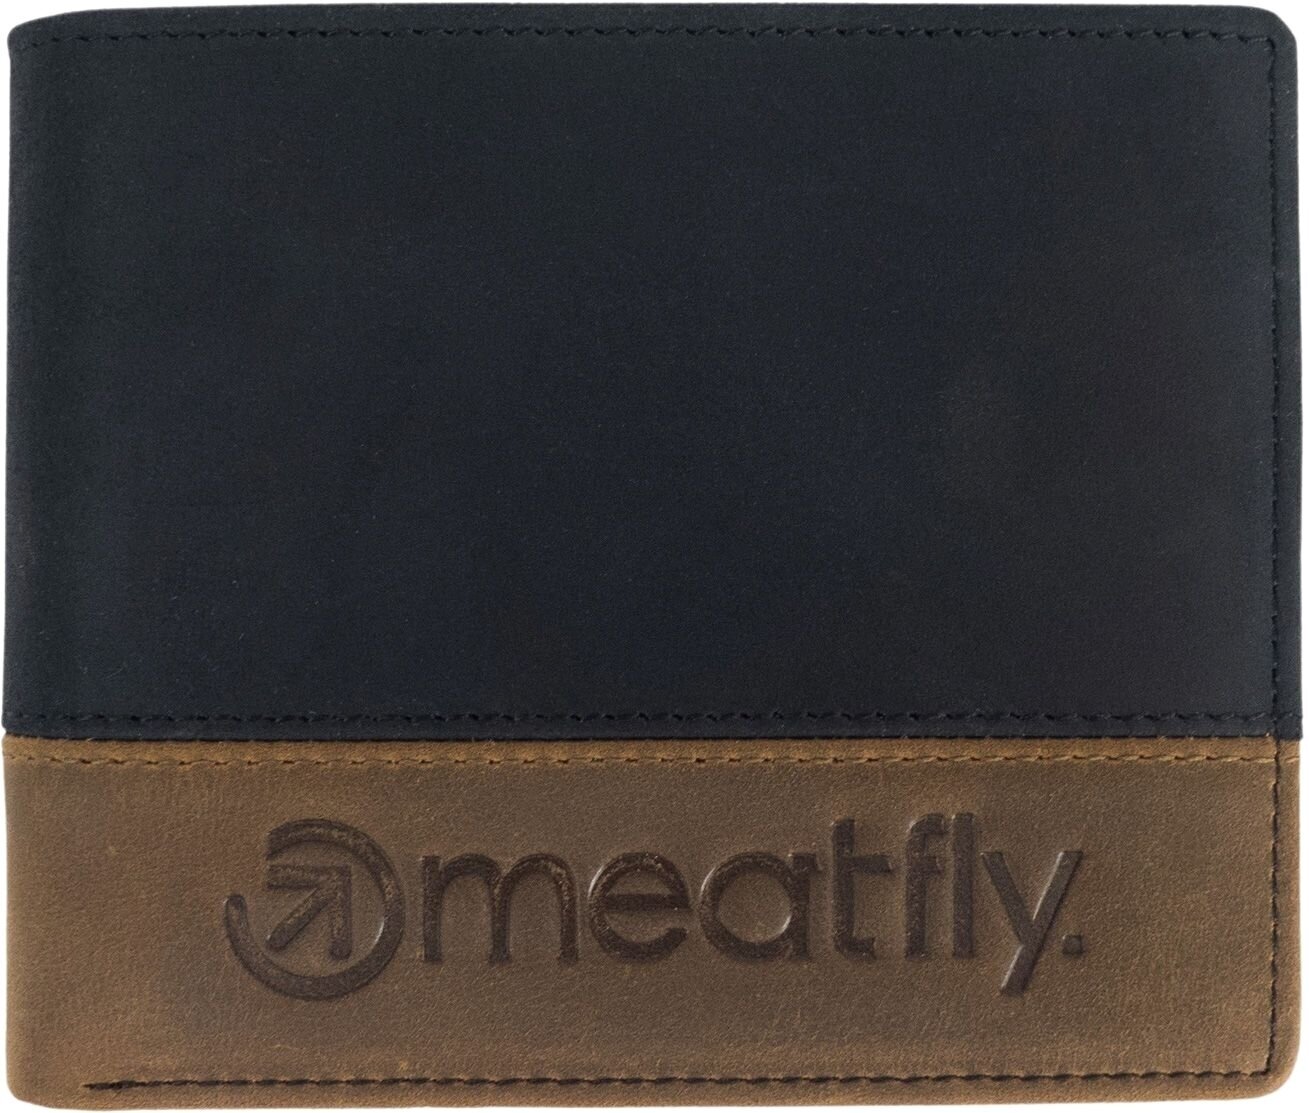 Portafoglio, borsa a tracolla Meatfly Eddie Premium Leather Wallet Black/Oak Portafoglio